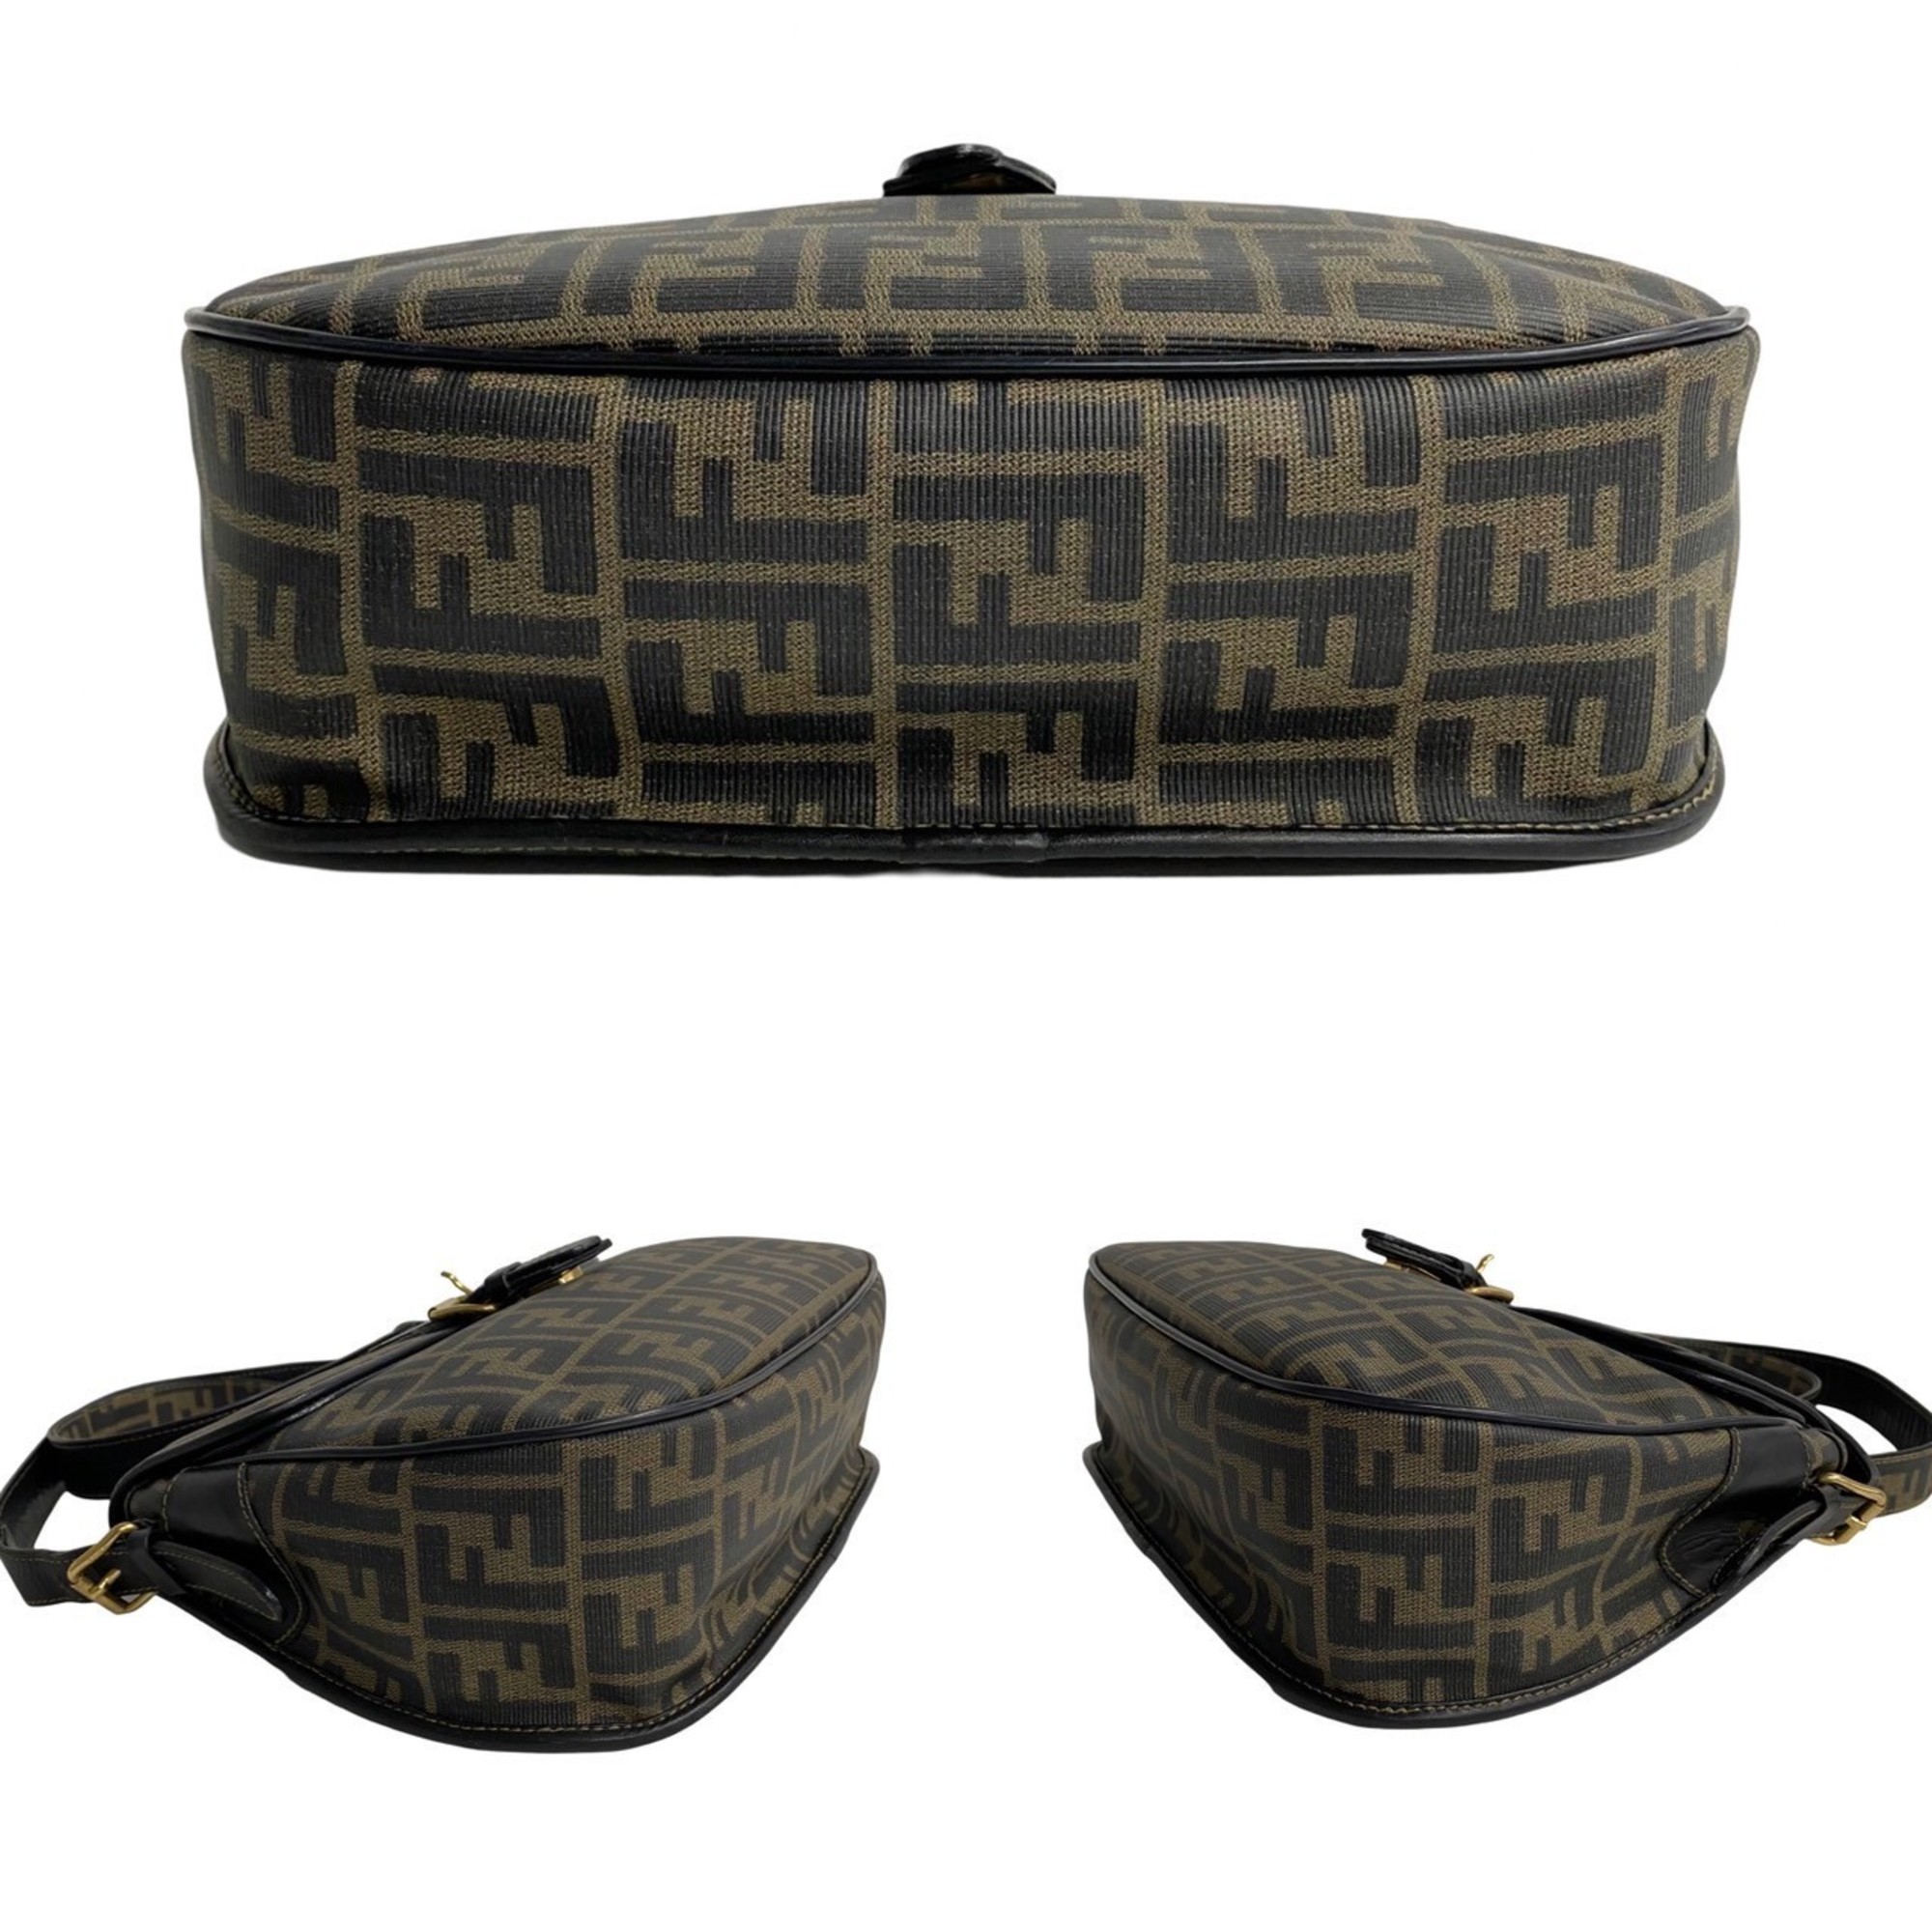 FENDI ZUCCA FF Leather Shoulder Bag Crossbody Black Khaki 62199